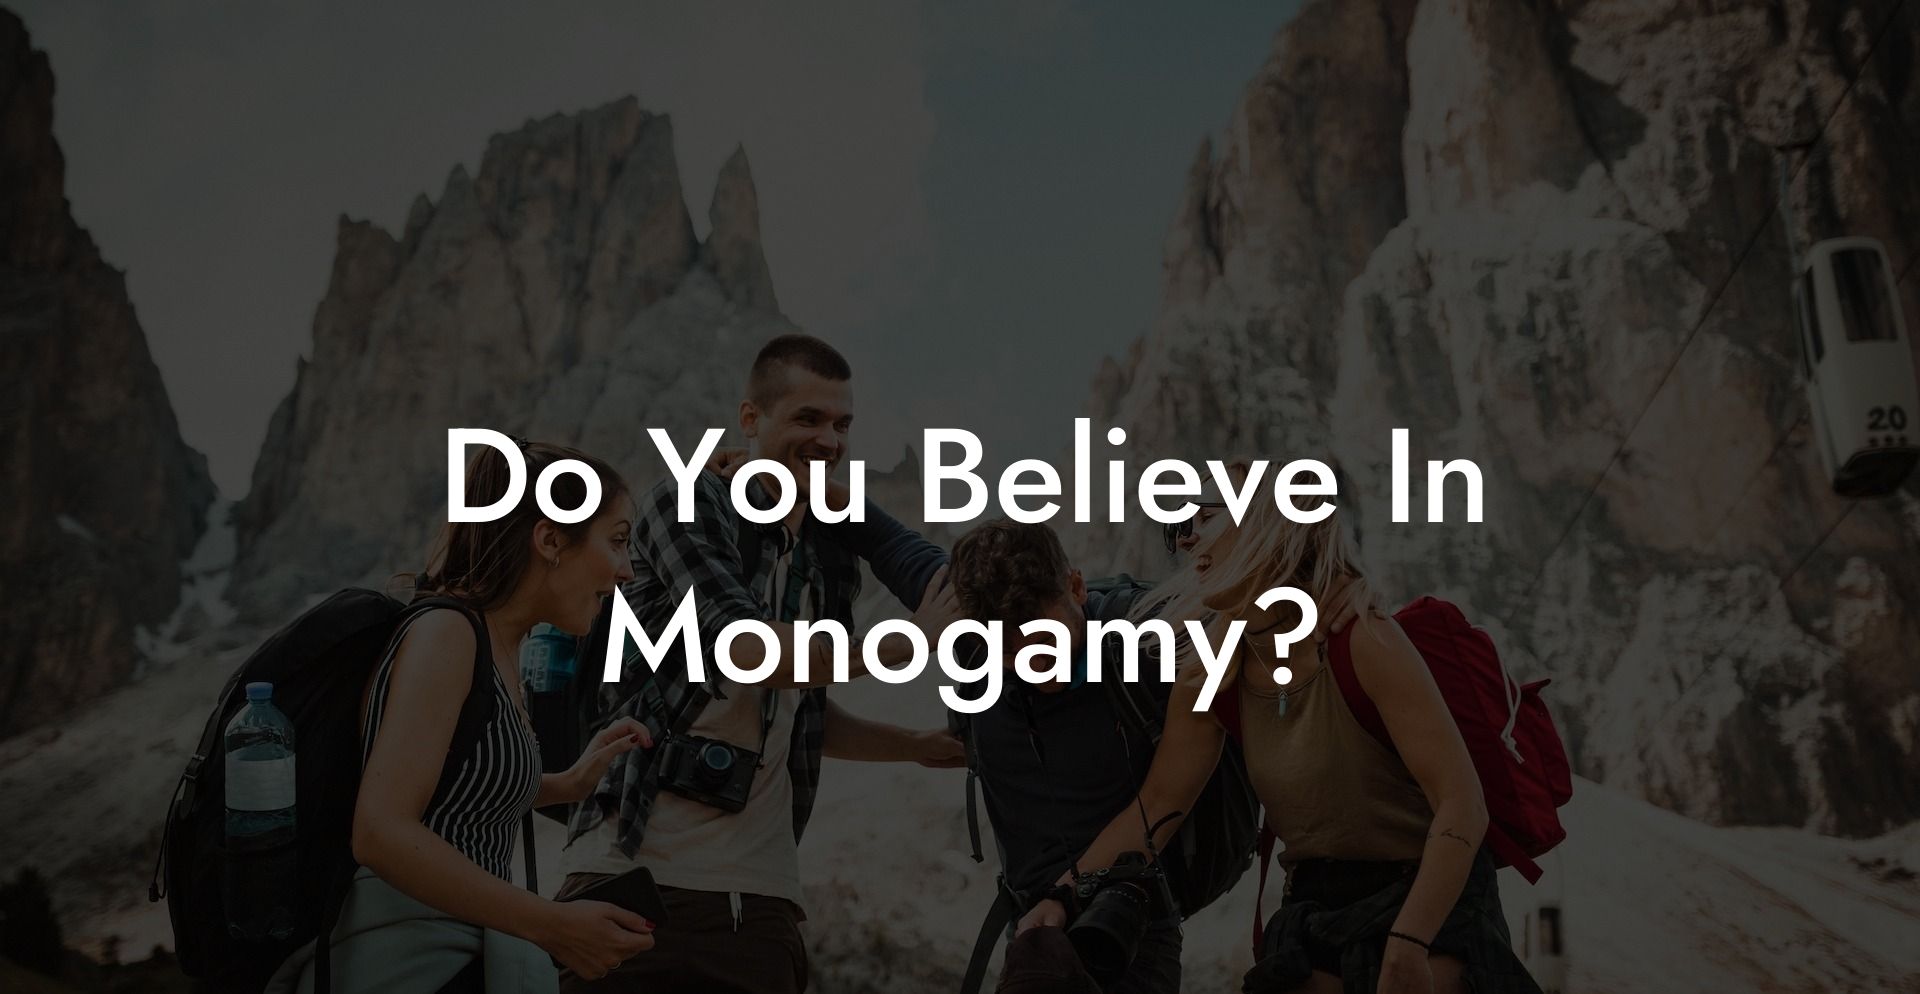 Do You Believe In Monogamy?